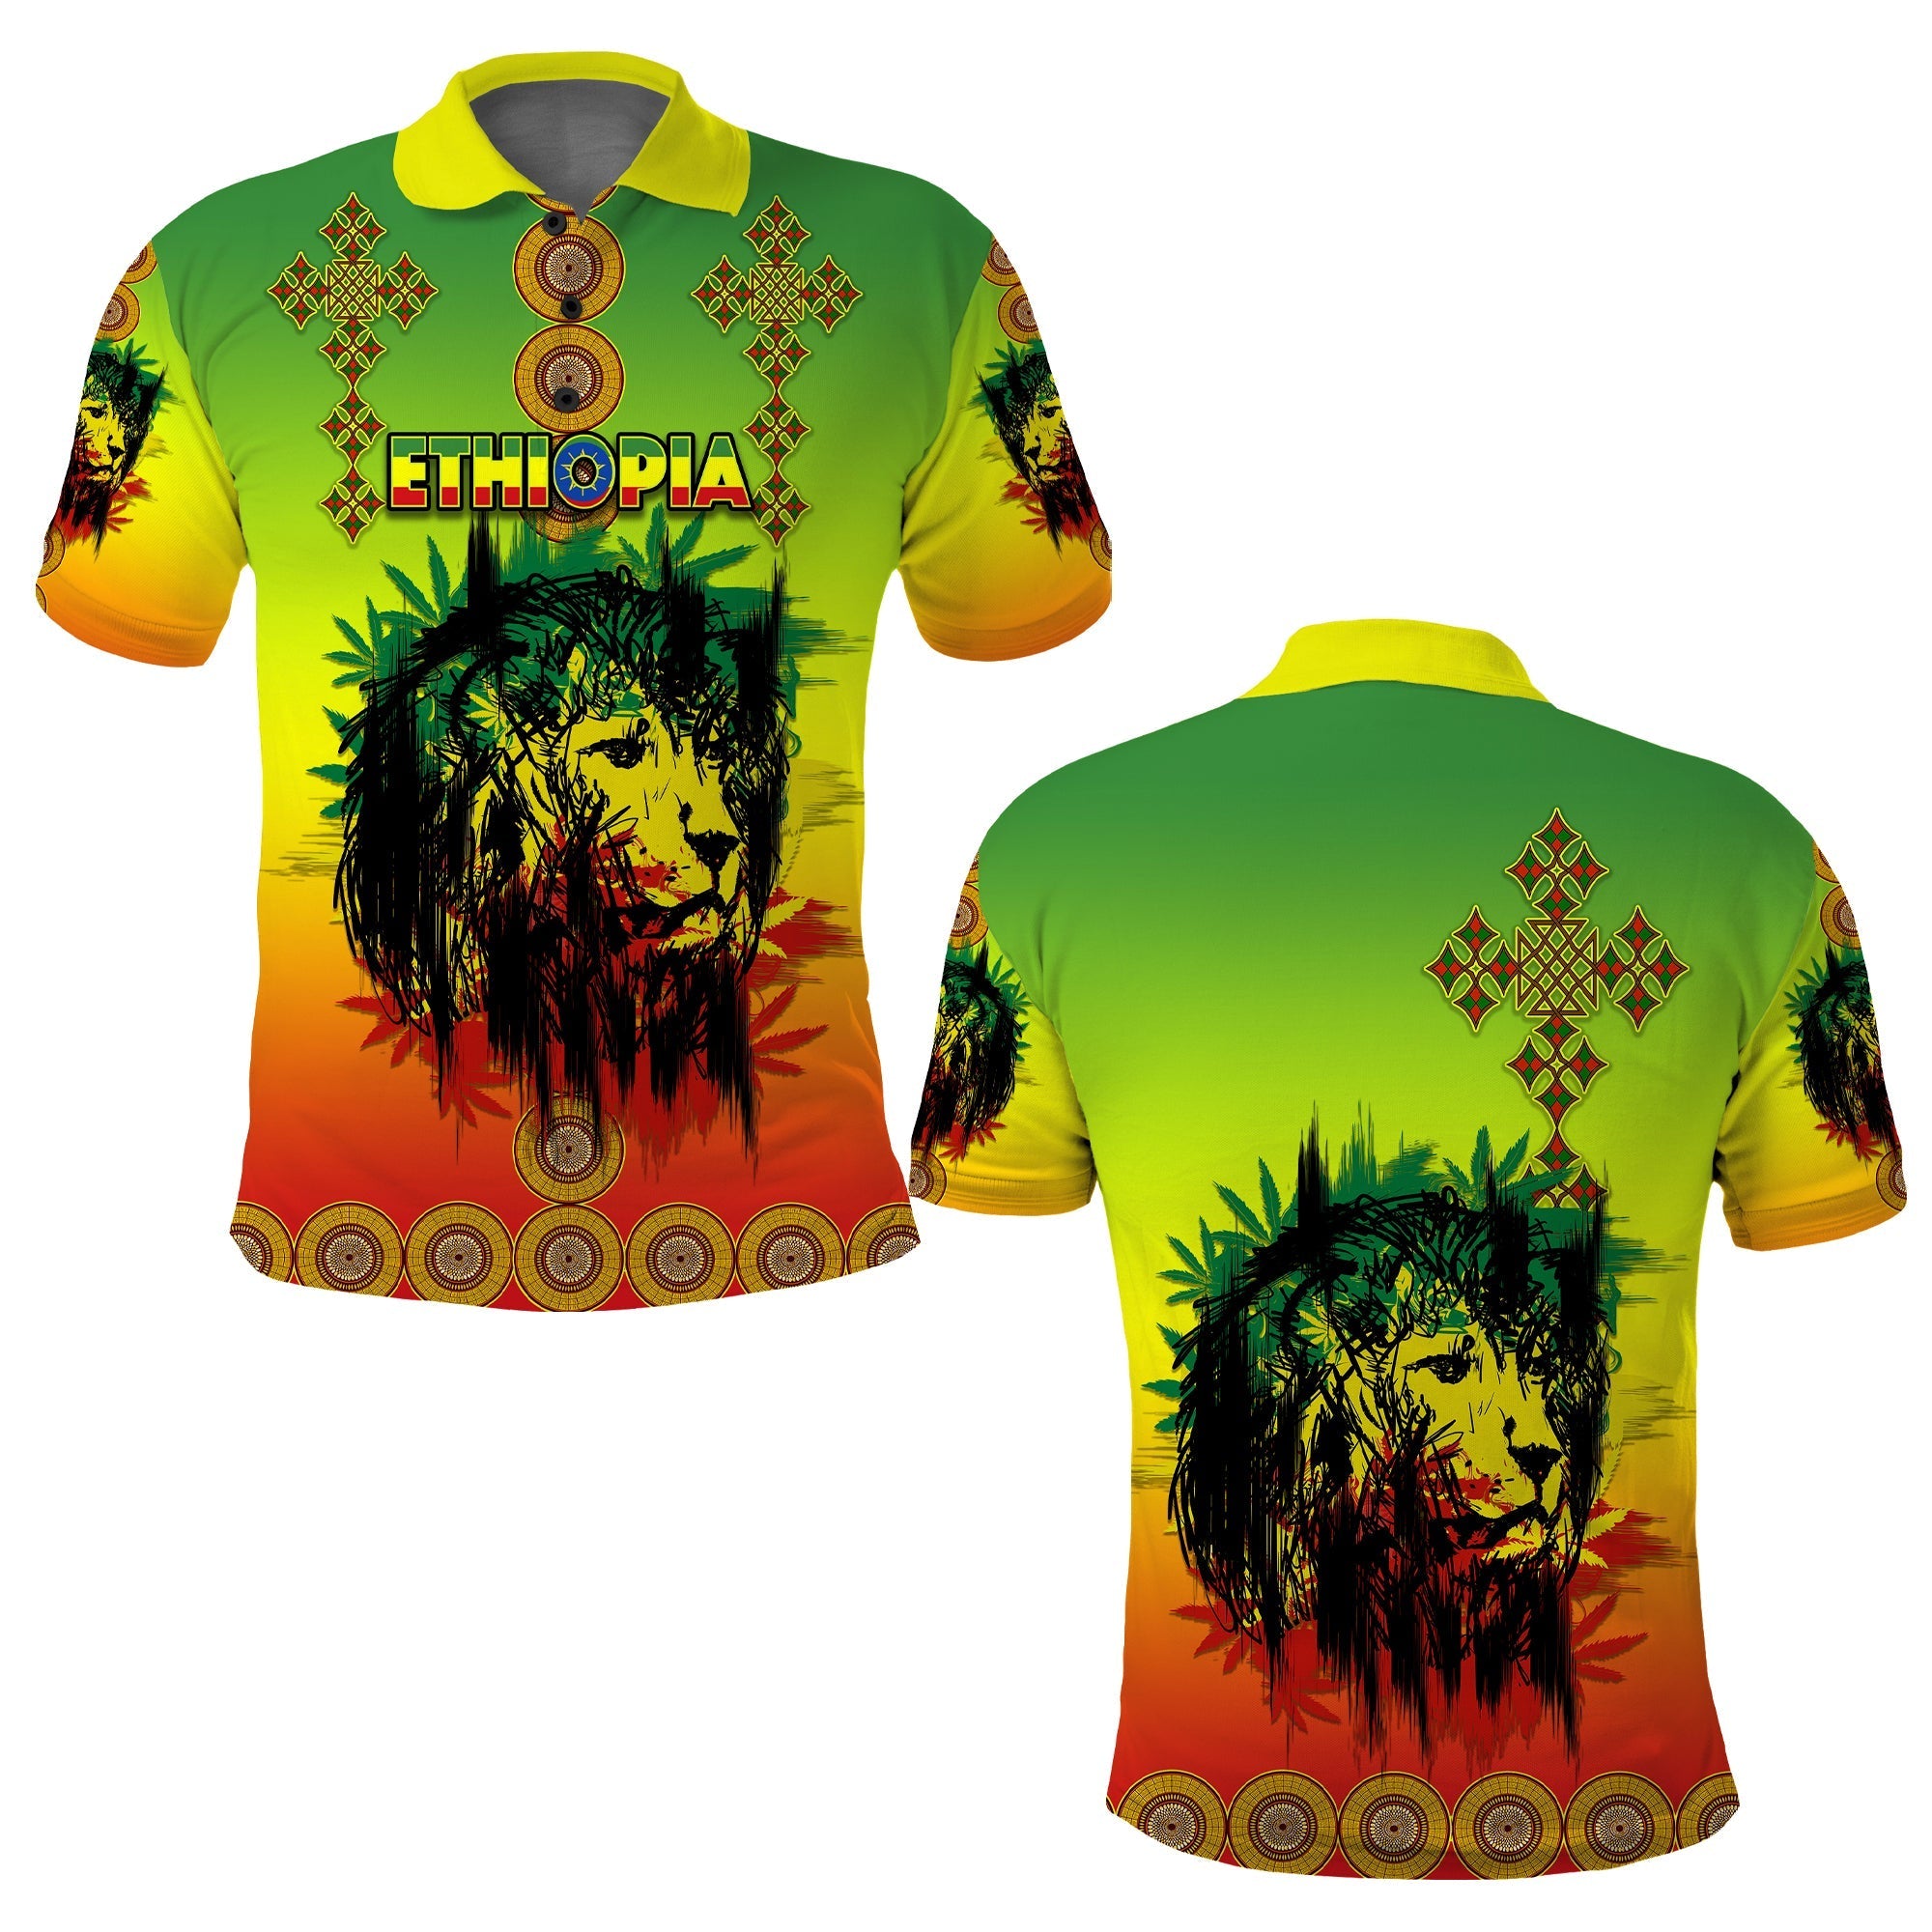 ethiopia-polo-shirt-cross-mix-lion-colorful-style